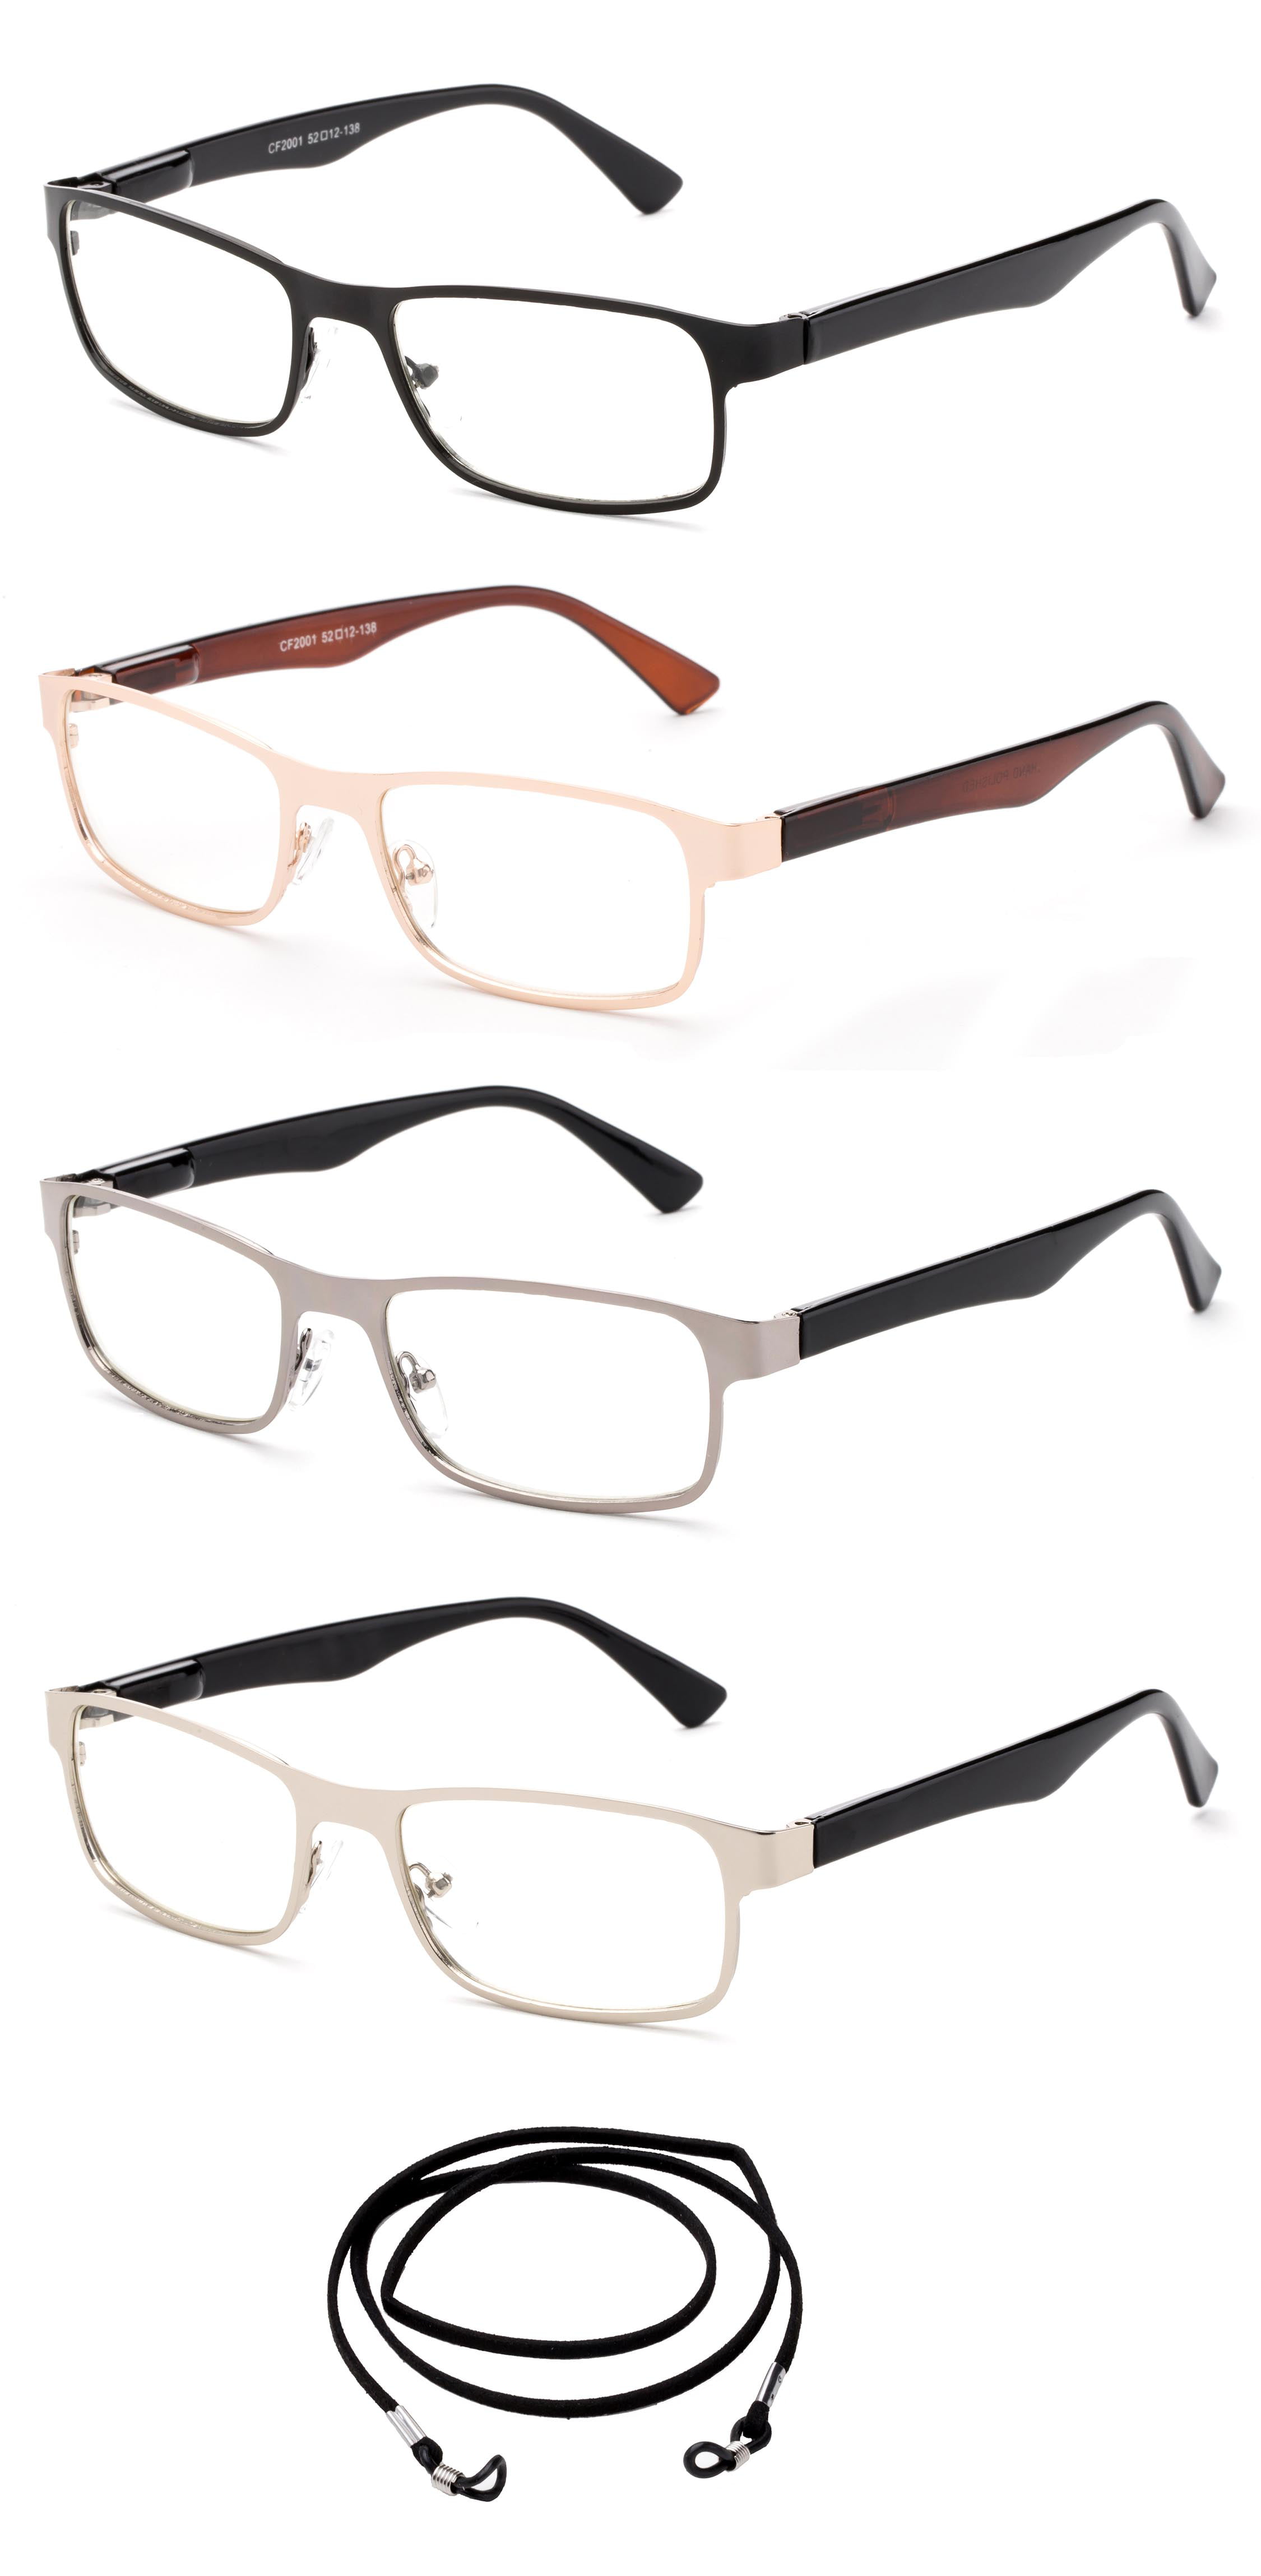 4 Pairs Newbee Fashion Ultaz Slim Fit Squared Spring Hinge Premium Reading Glasses With